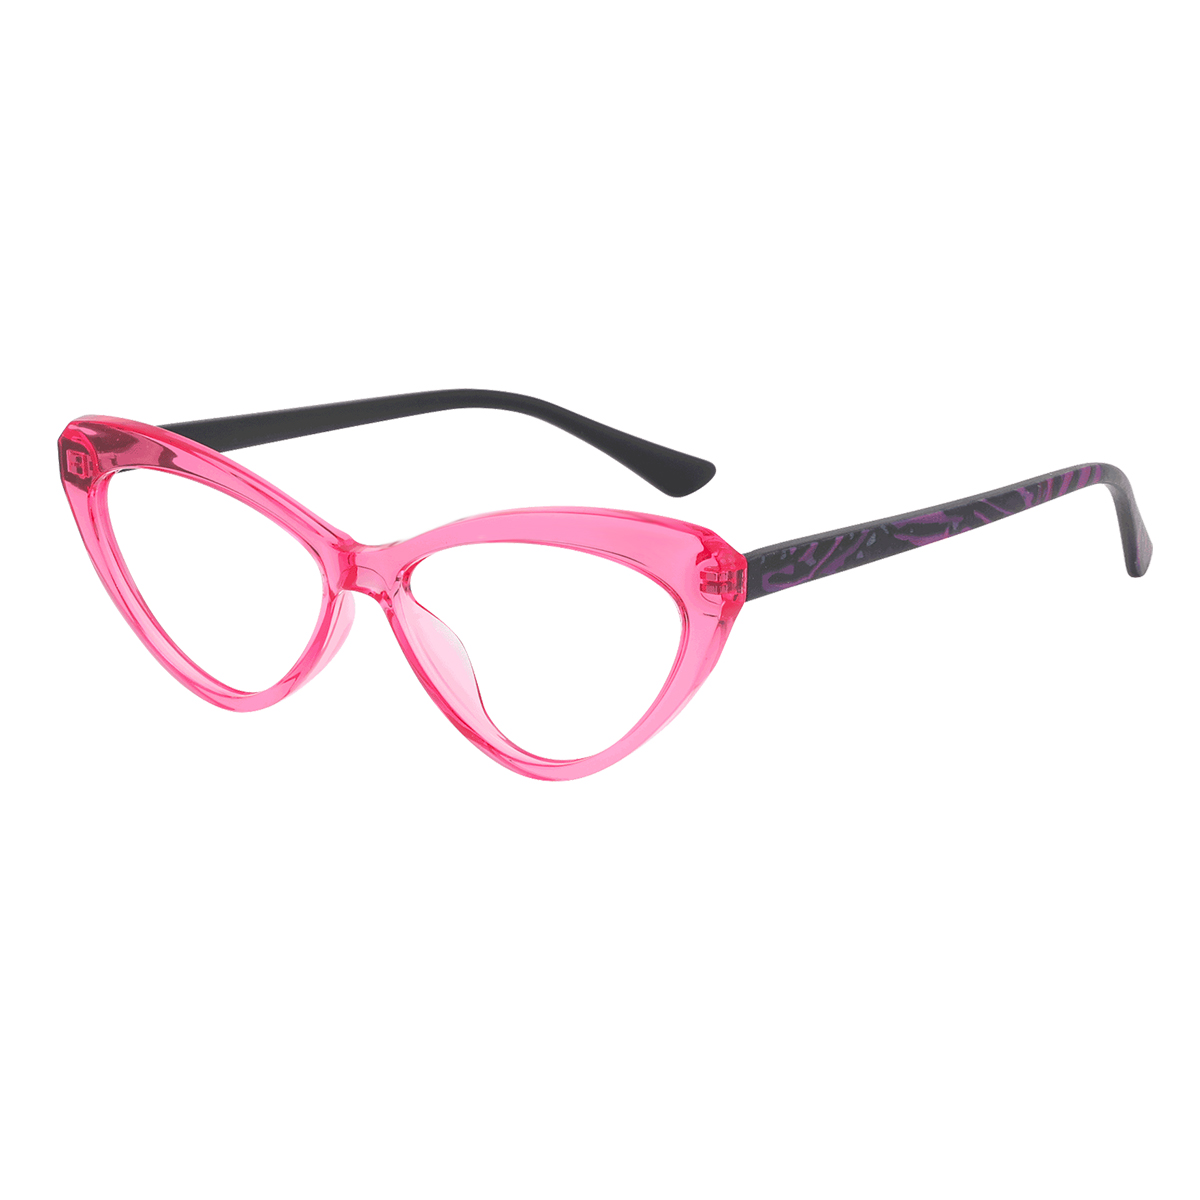 Pindus - Cat-eye Pink Reading Glasses for Women